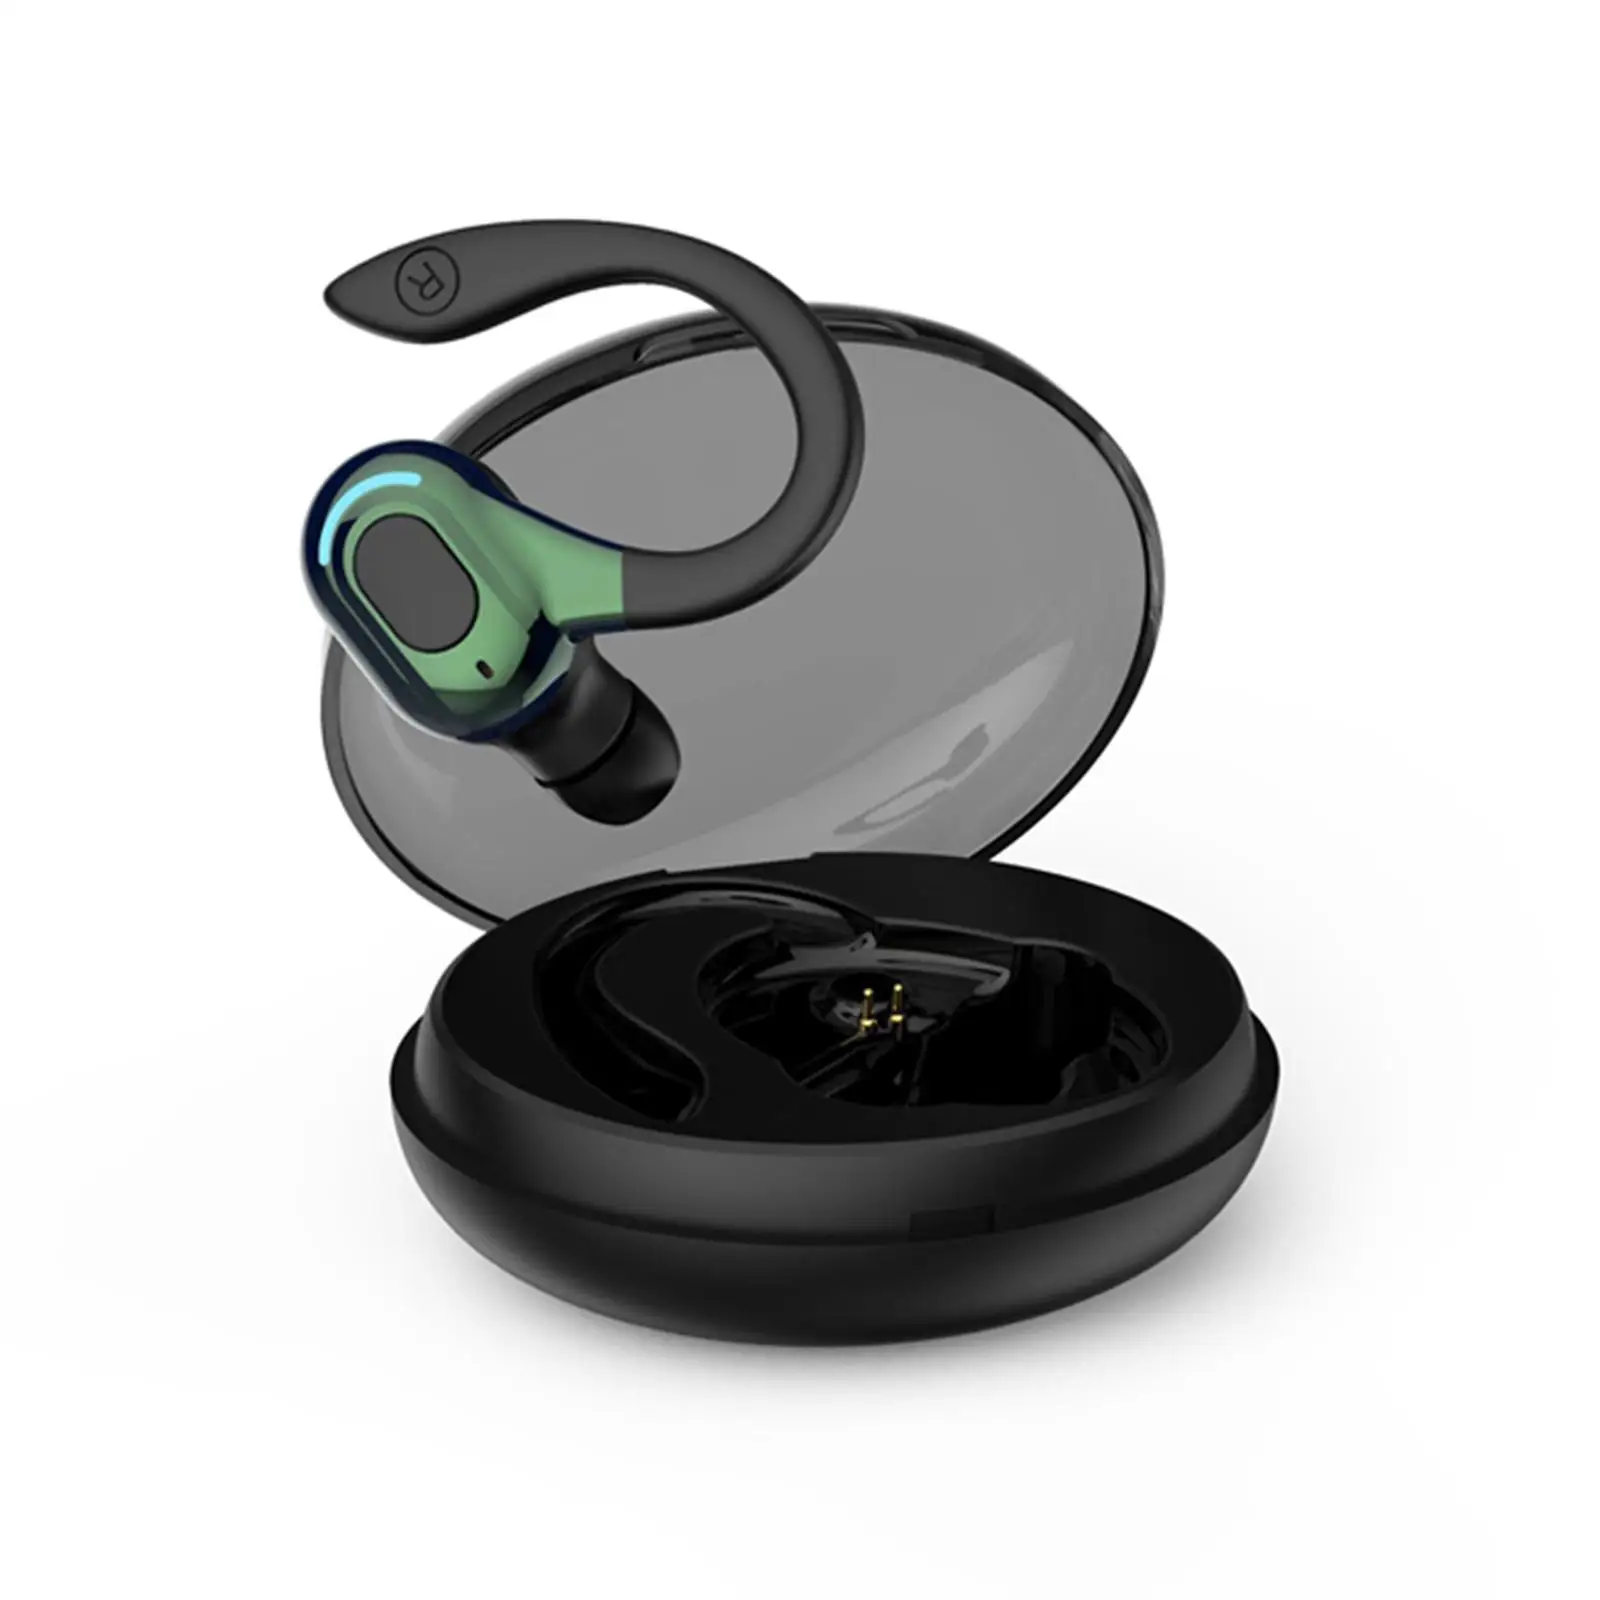 Sports Headset IPX4 Waterproof Built in Mic Stereo Sound Sweatproof HiFi Earphones Earbuds Earpiece for Running Business Driving